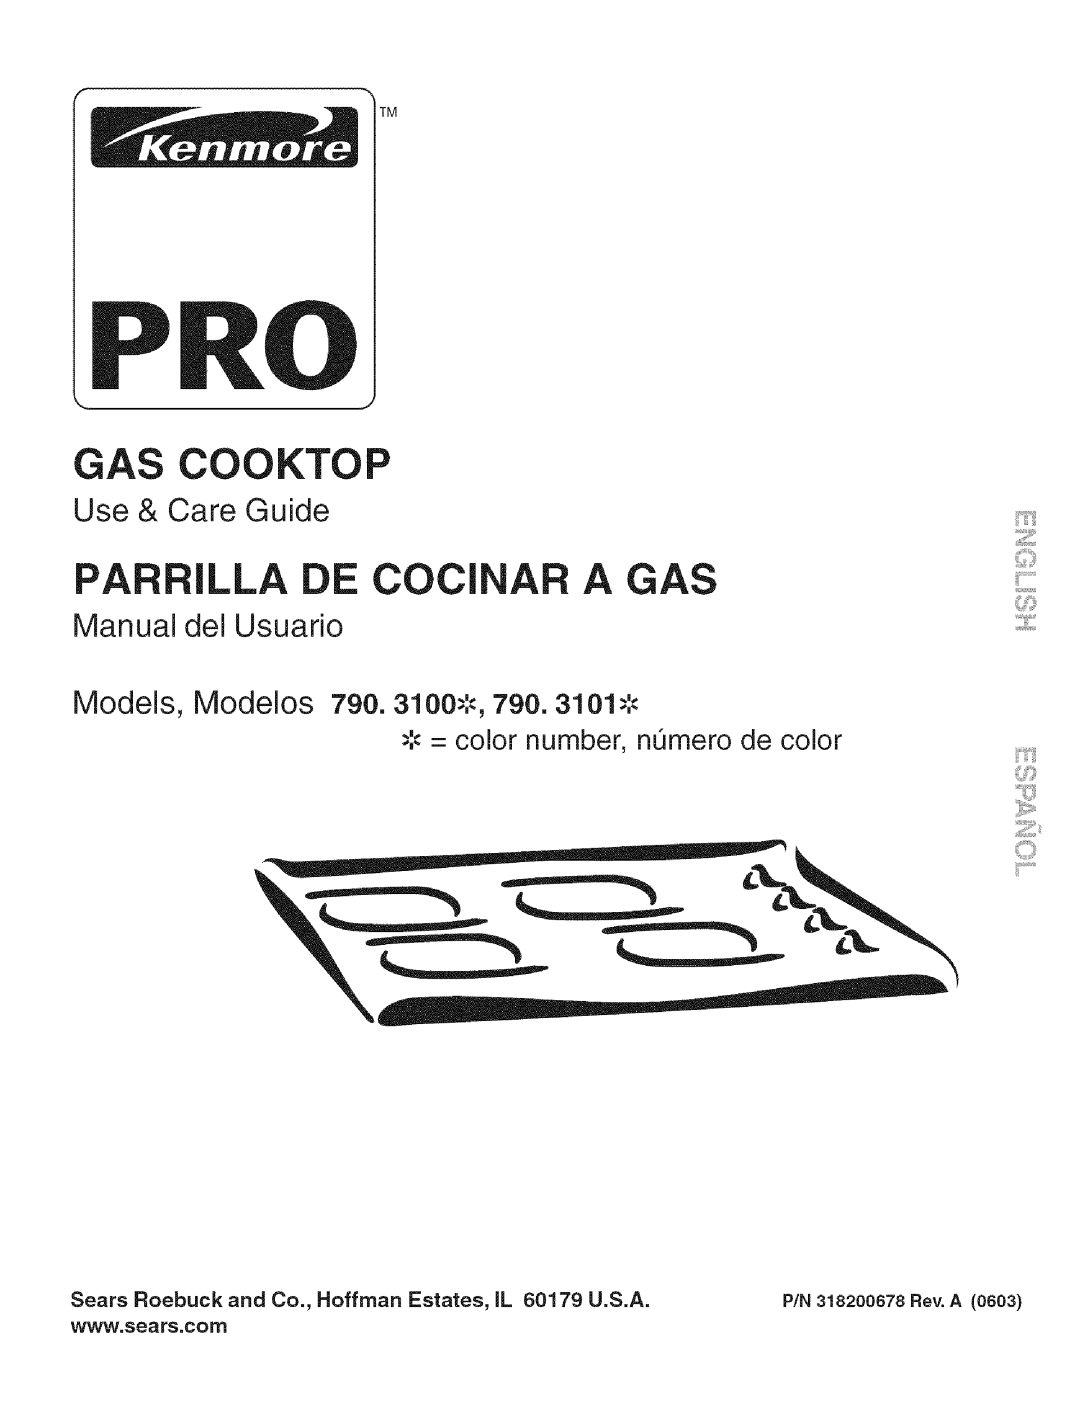 Kenmore 790.31 manual Use & Care Guide, Manual del Usuario, Gas Cooktop, Parrilla E Cocinar A Gas, P/N 318200678 Re , A 